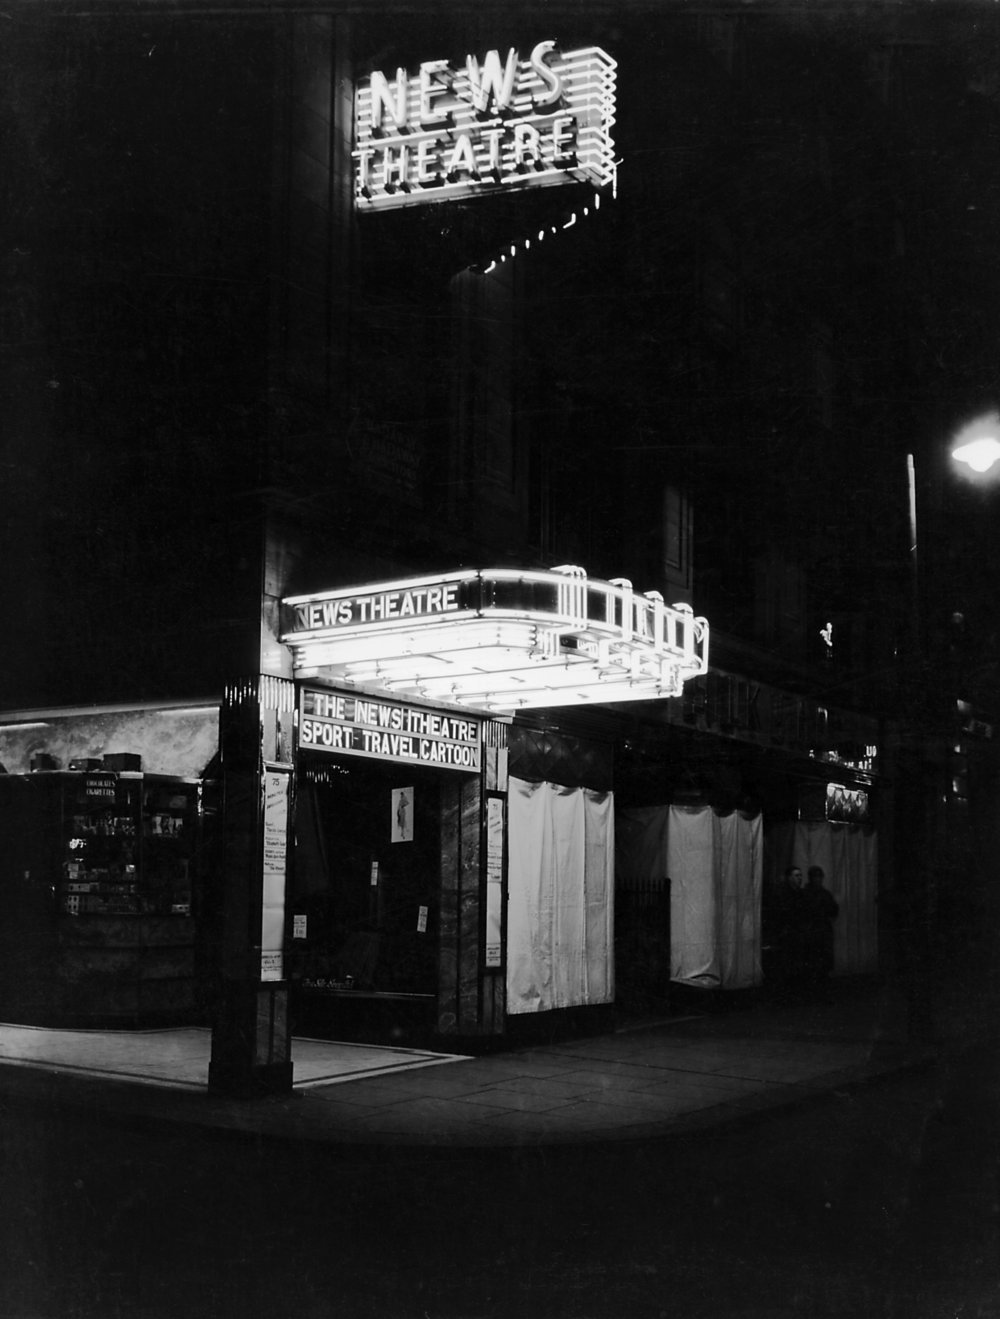 News Theatre (now Tyneside Cinema), Newcastle, 1938